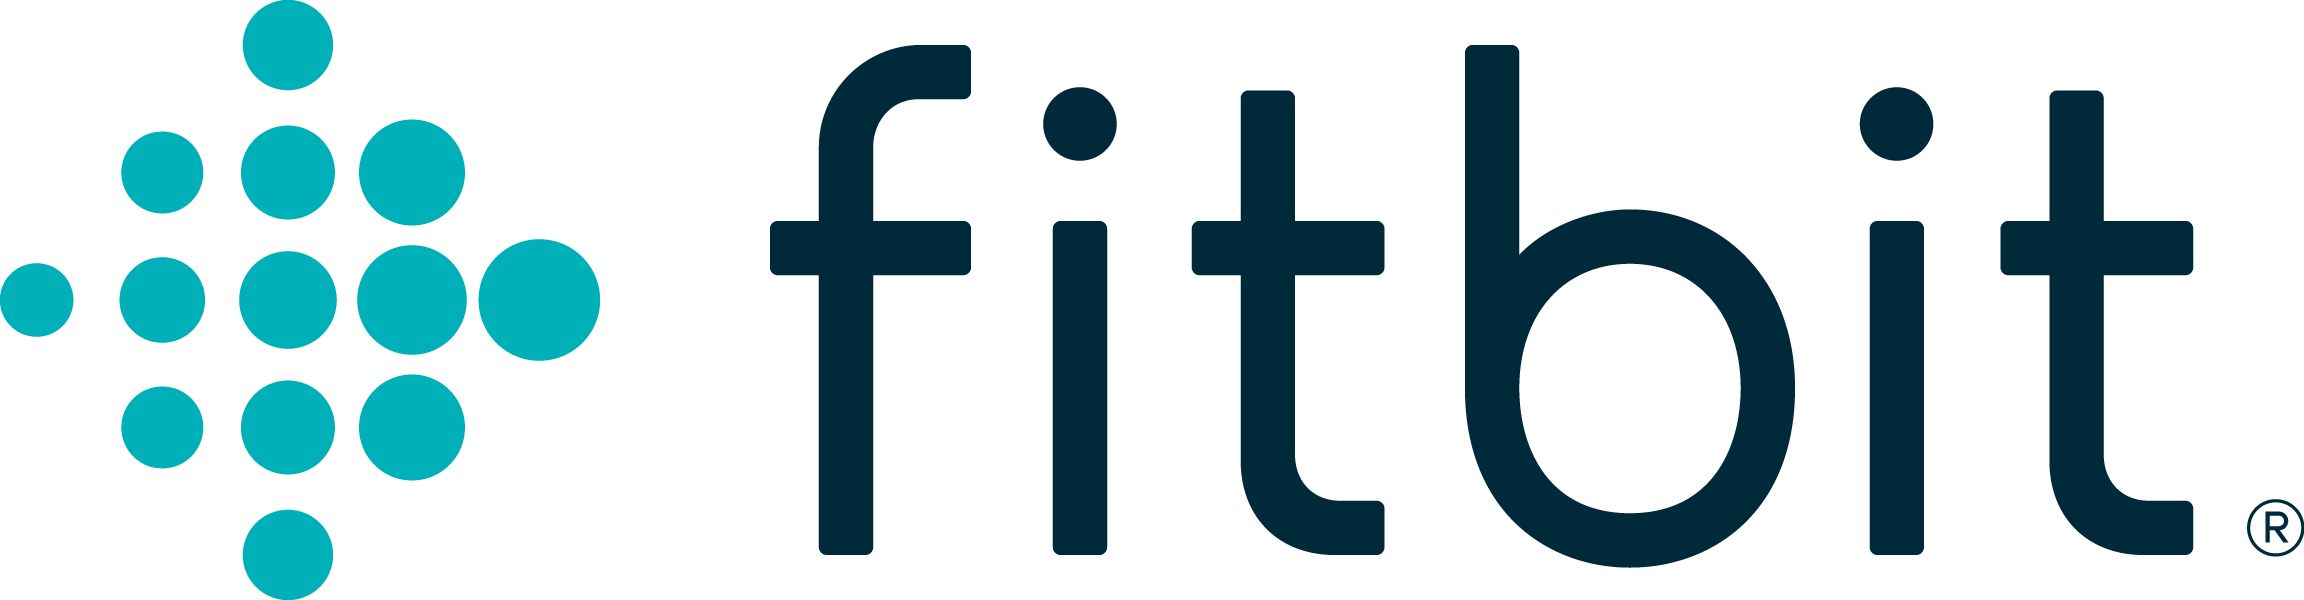 Fitbit_logo_RGB.png